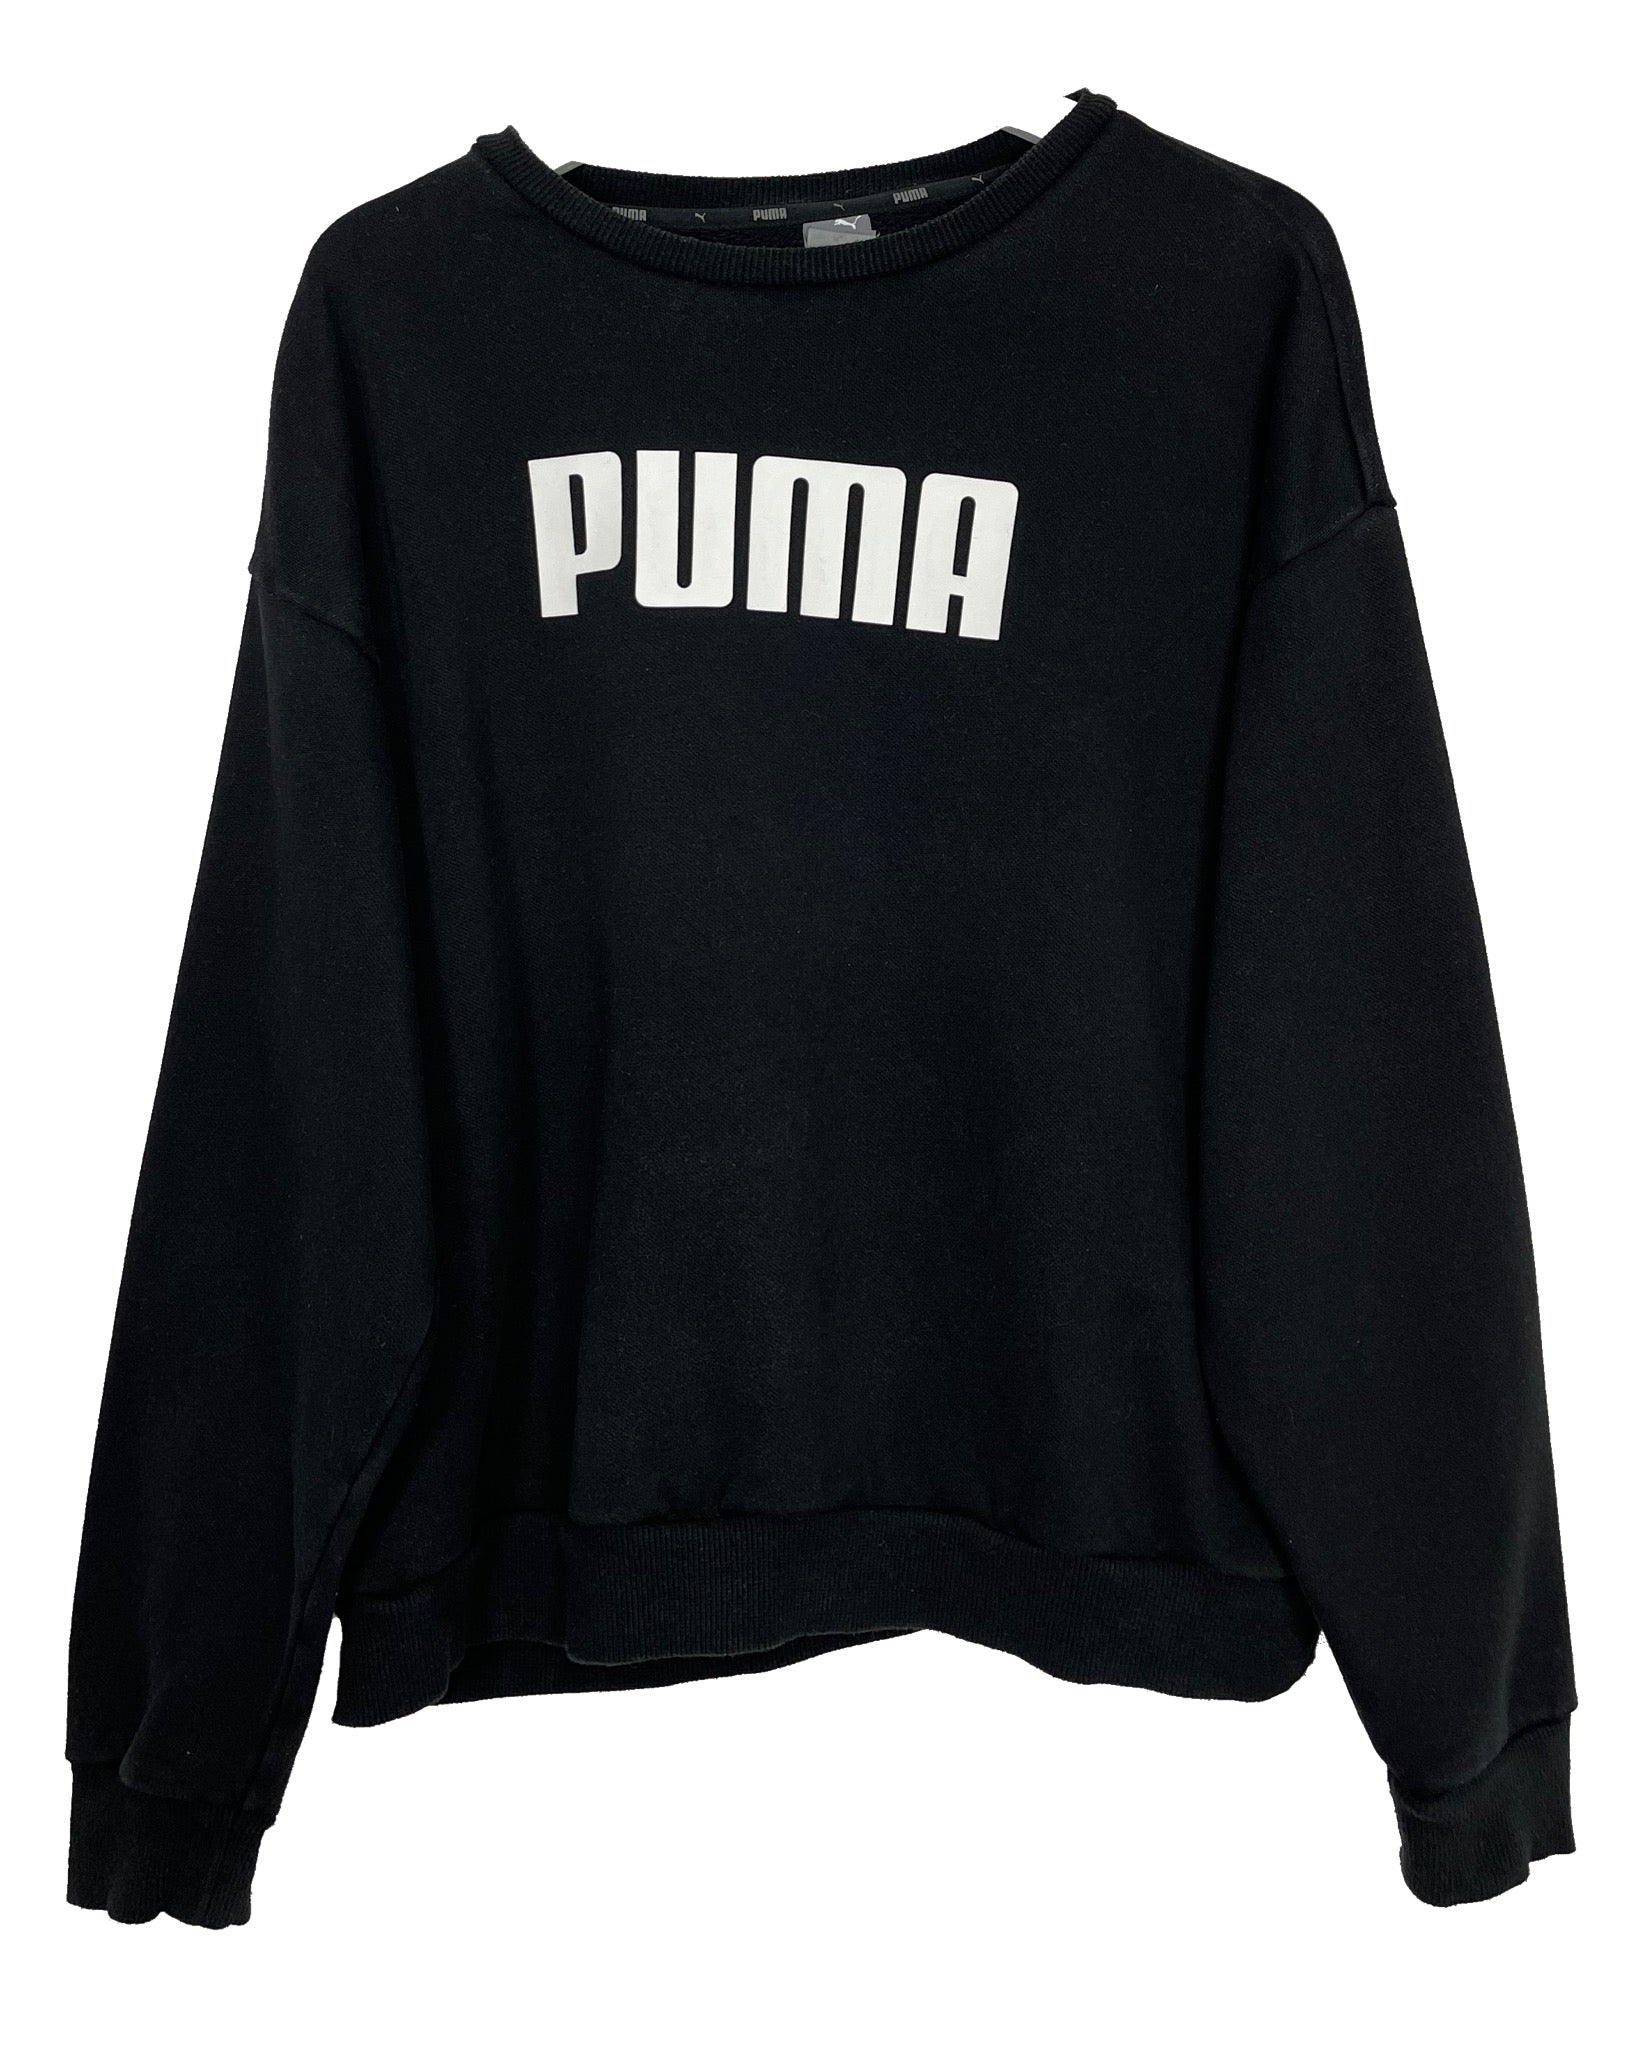  Sweatshirt Puma Sweat - XL - PLOMOSTORE